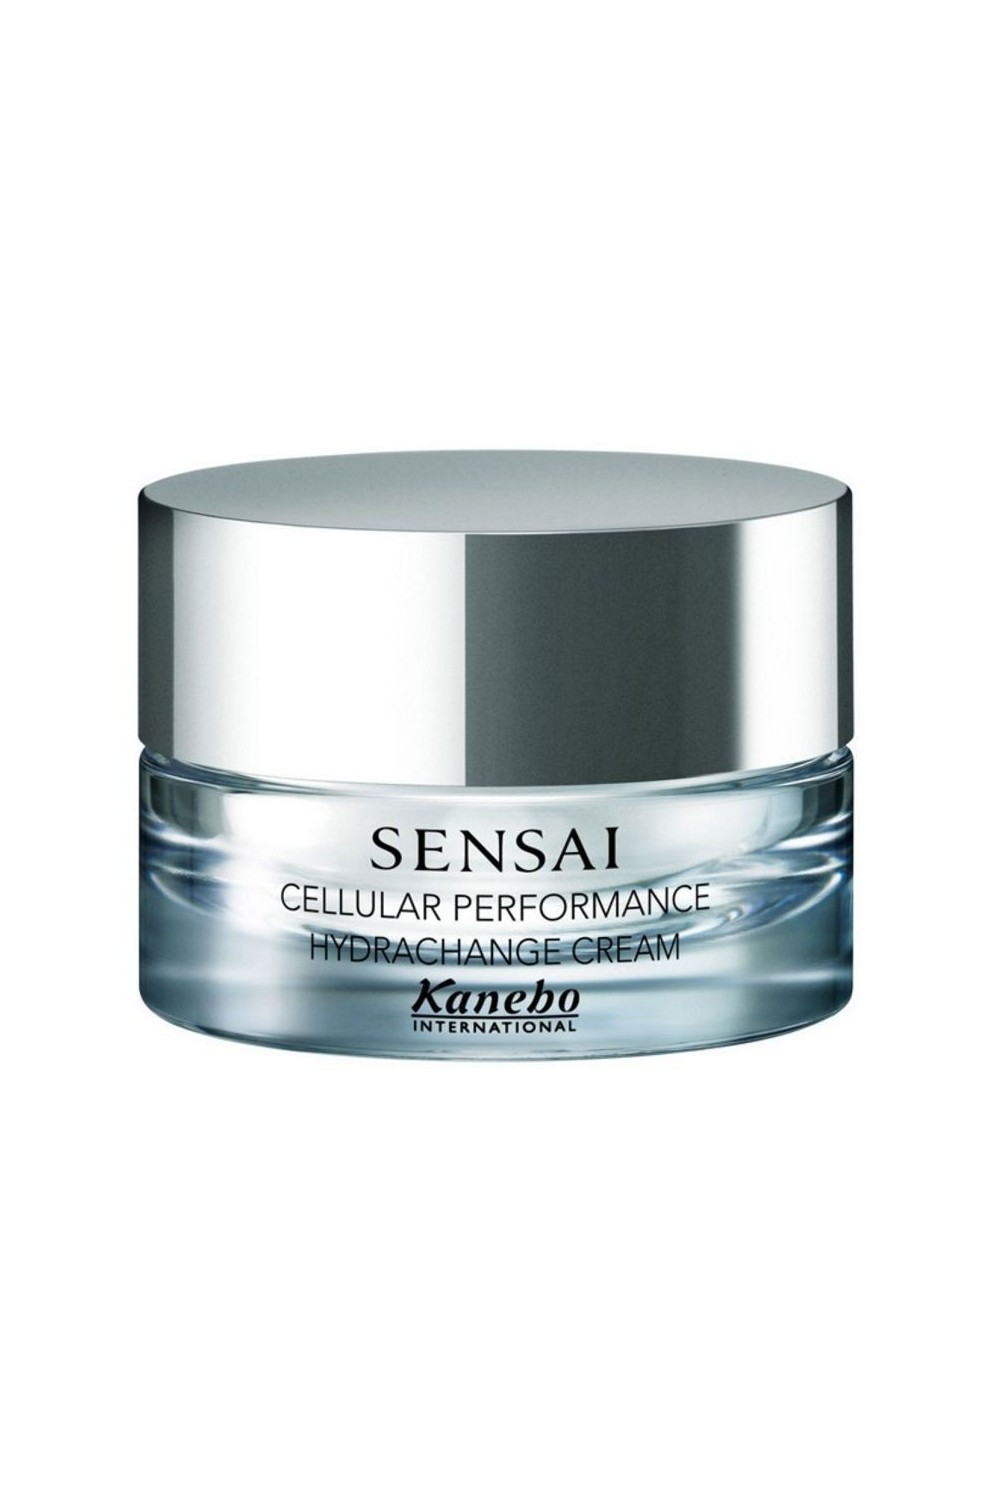 Kanebo Sensai Cellular Performance Hydrachange Cream 40ml